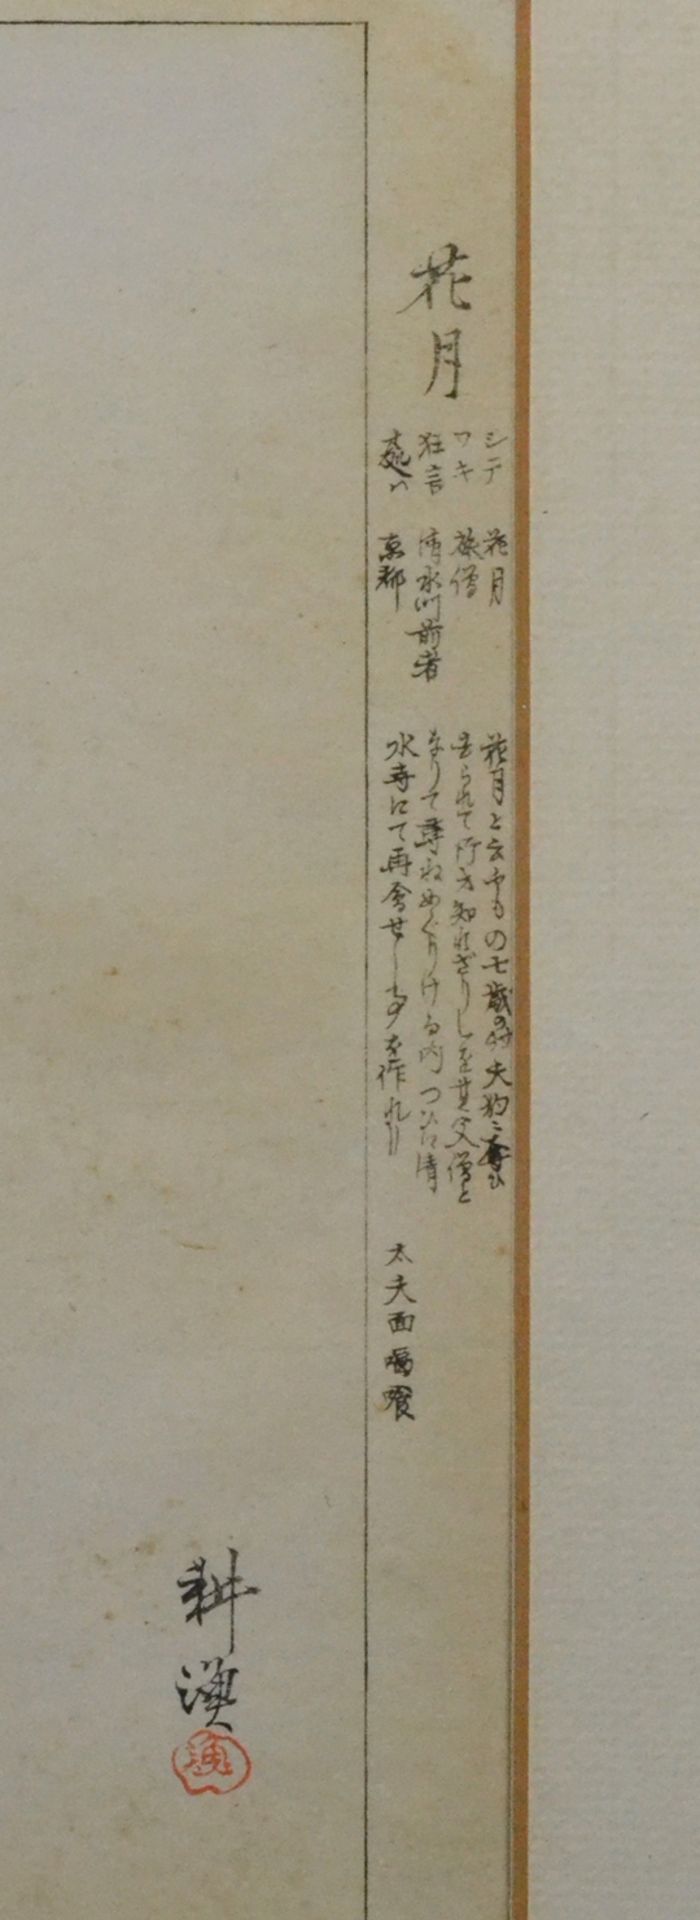 Tsukioka Kōgyo (1869 - 1927) "Nogakuzue", japanese woodblock print, "Archer", 19th century - Image 3 of 3